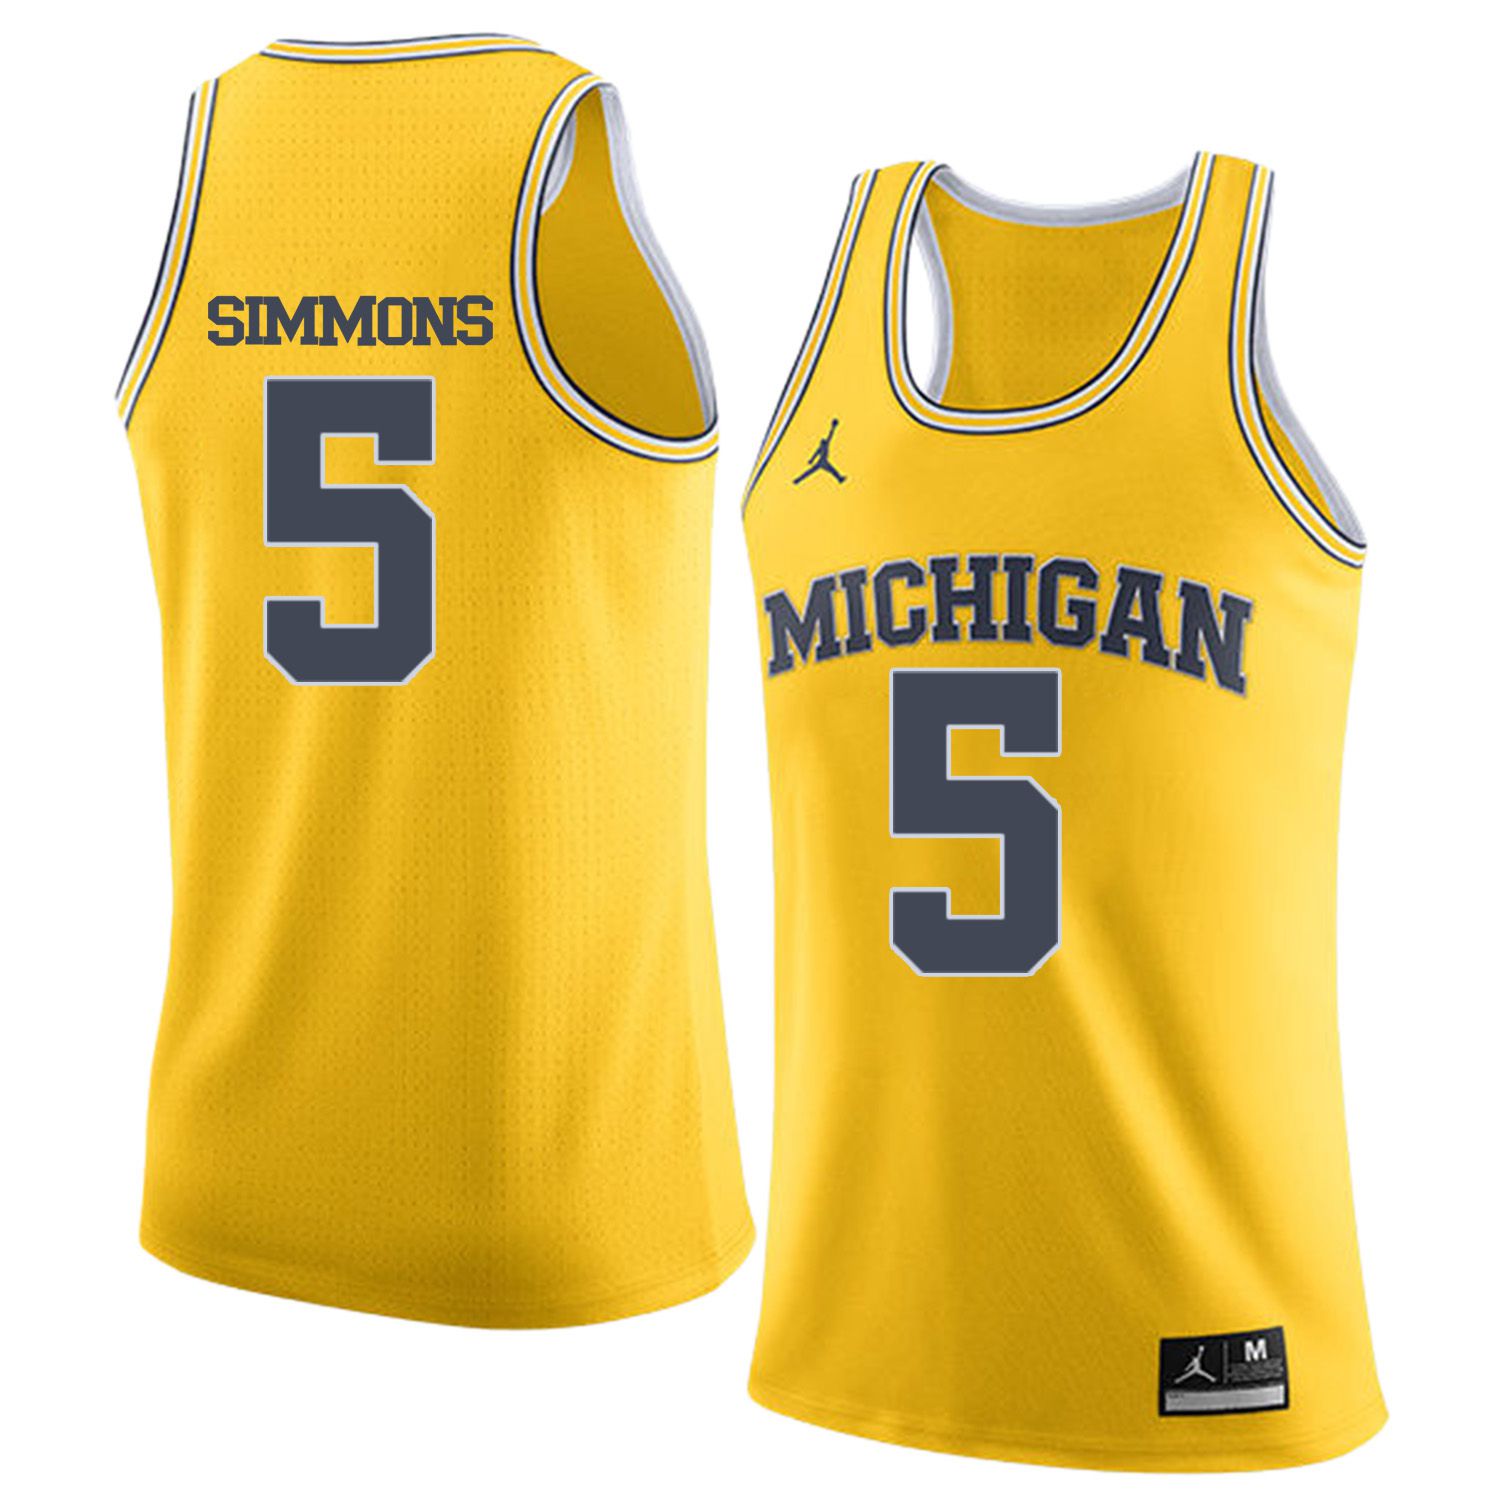 Men Jordan University of Michigan Basketball Yellow #5 Simmons Customized NCAA Jerseys